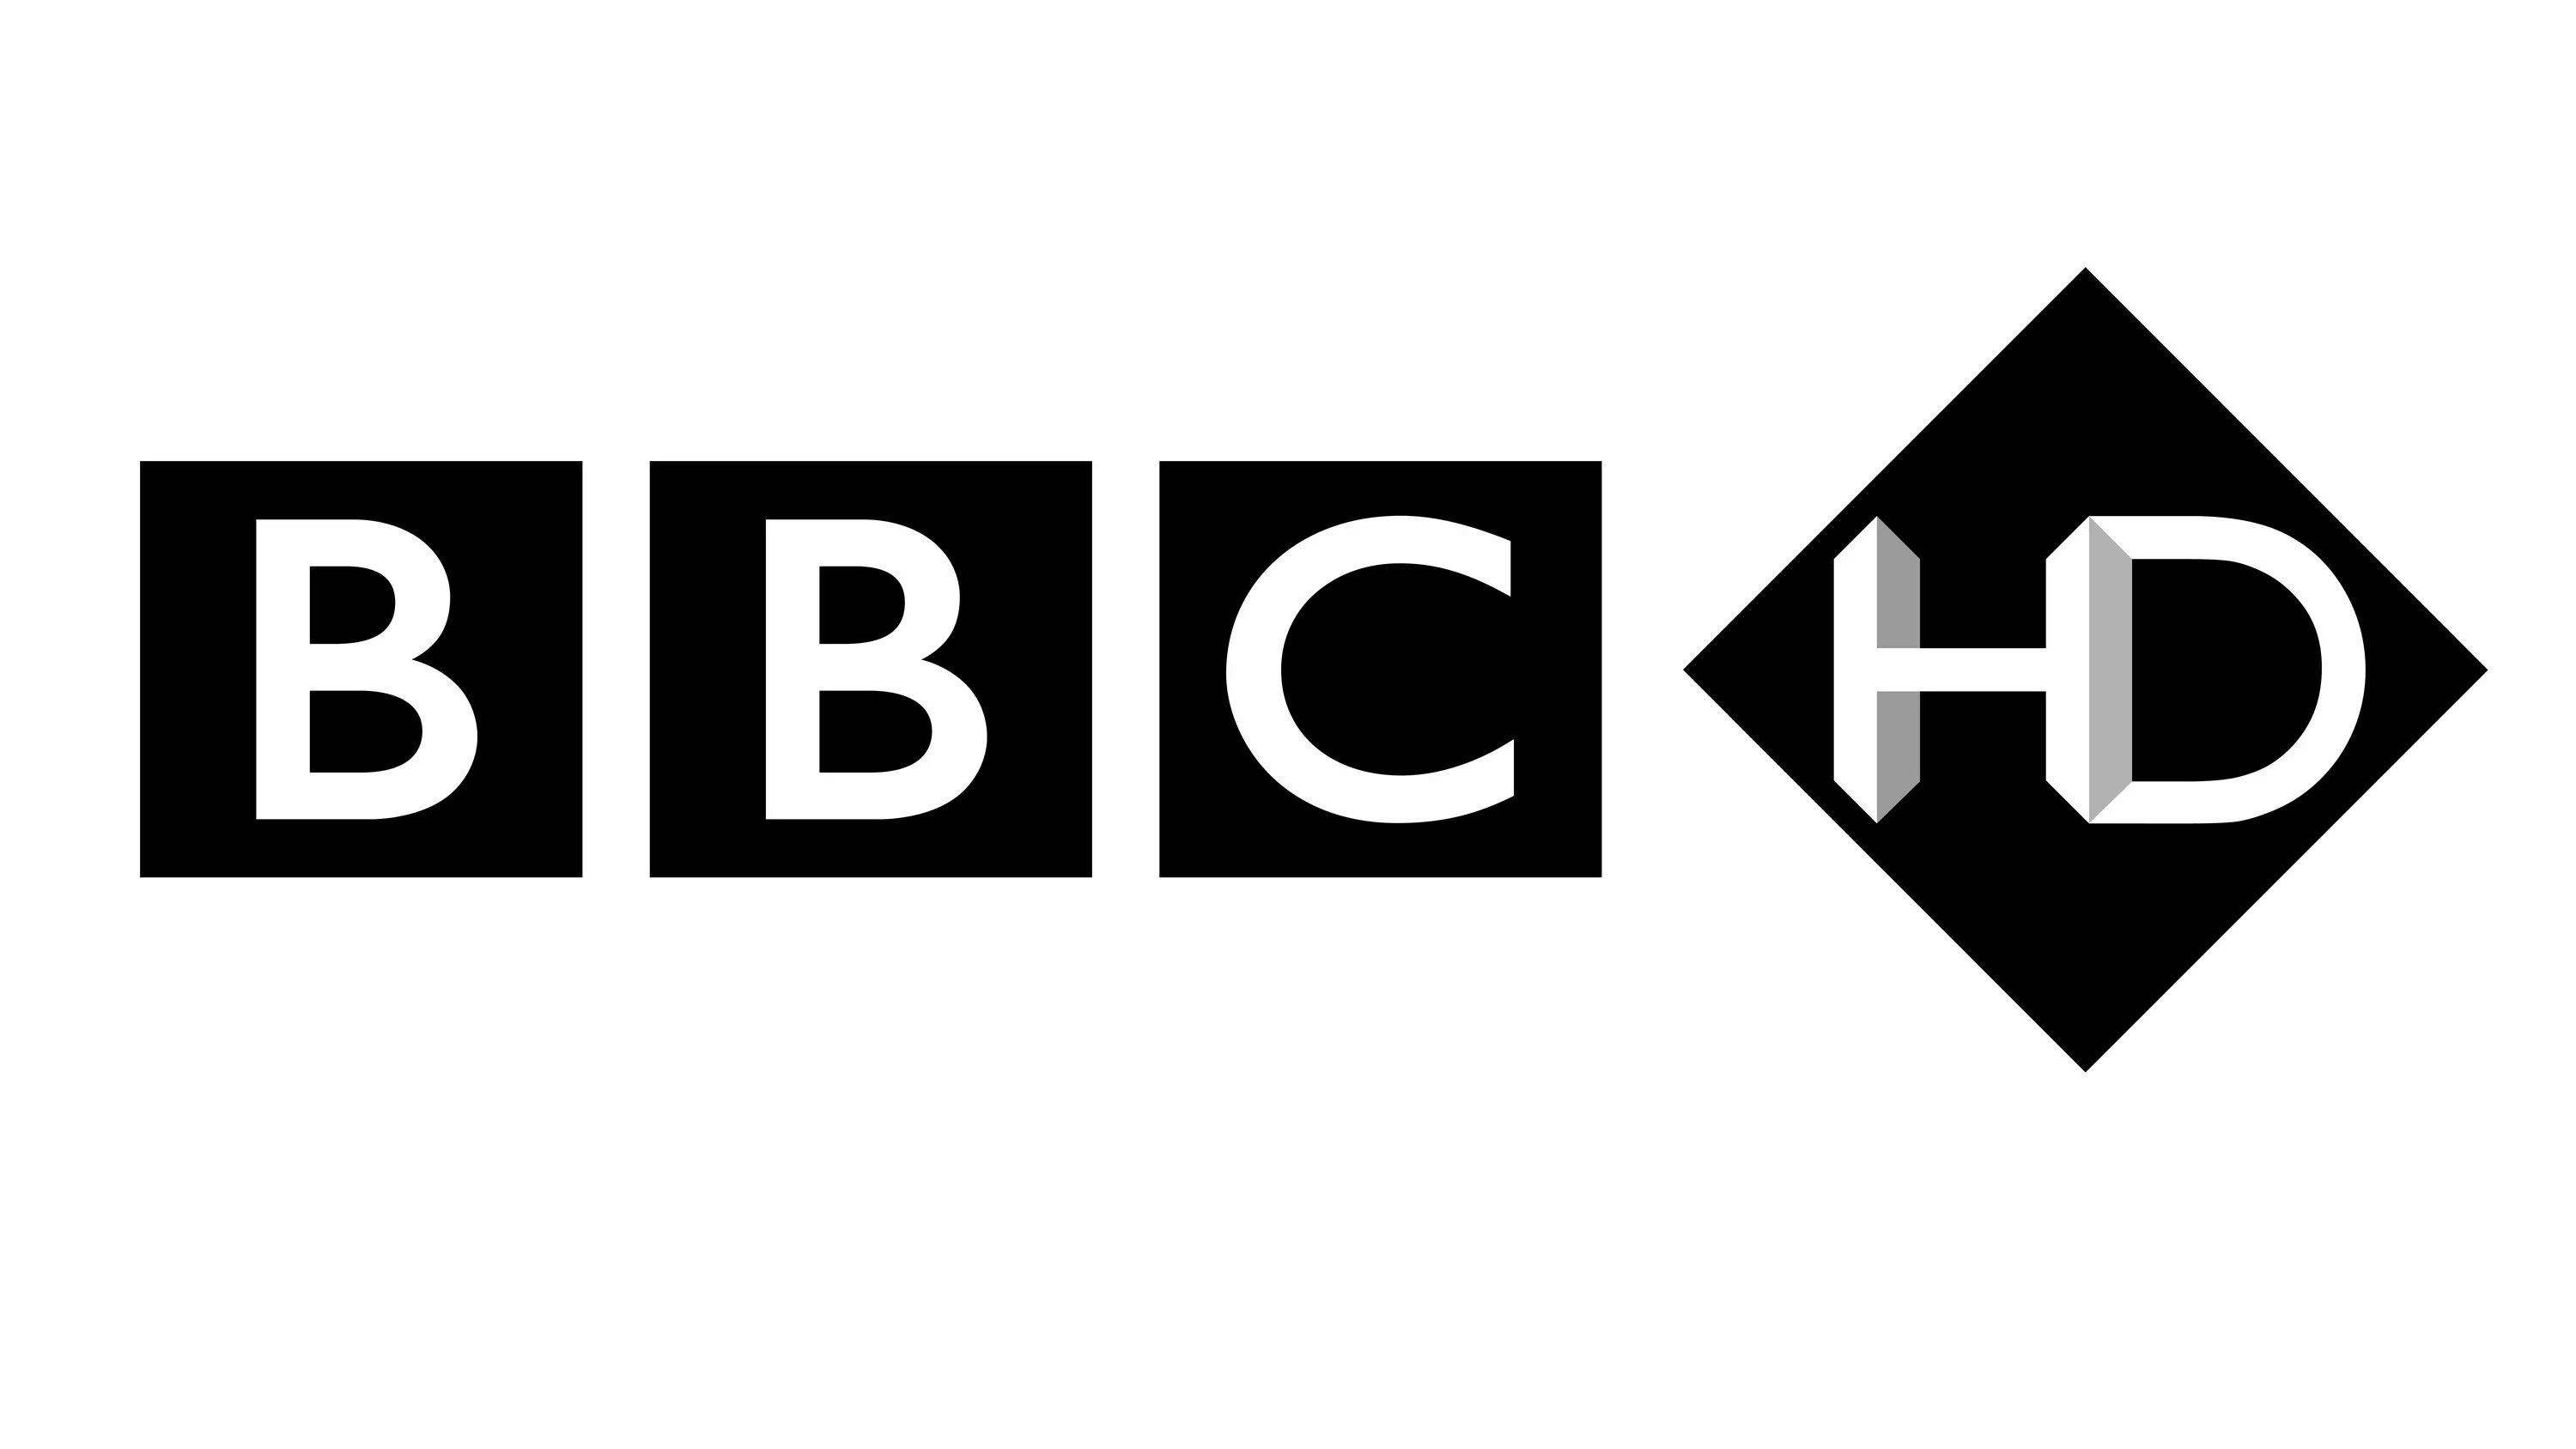 Bbc. Канал bbc. Логотип ббс. Значок bbc.